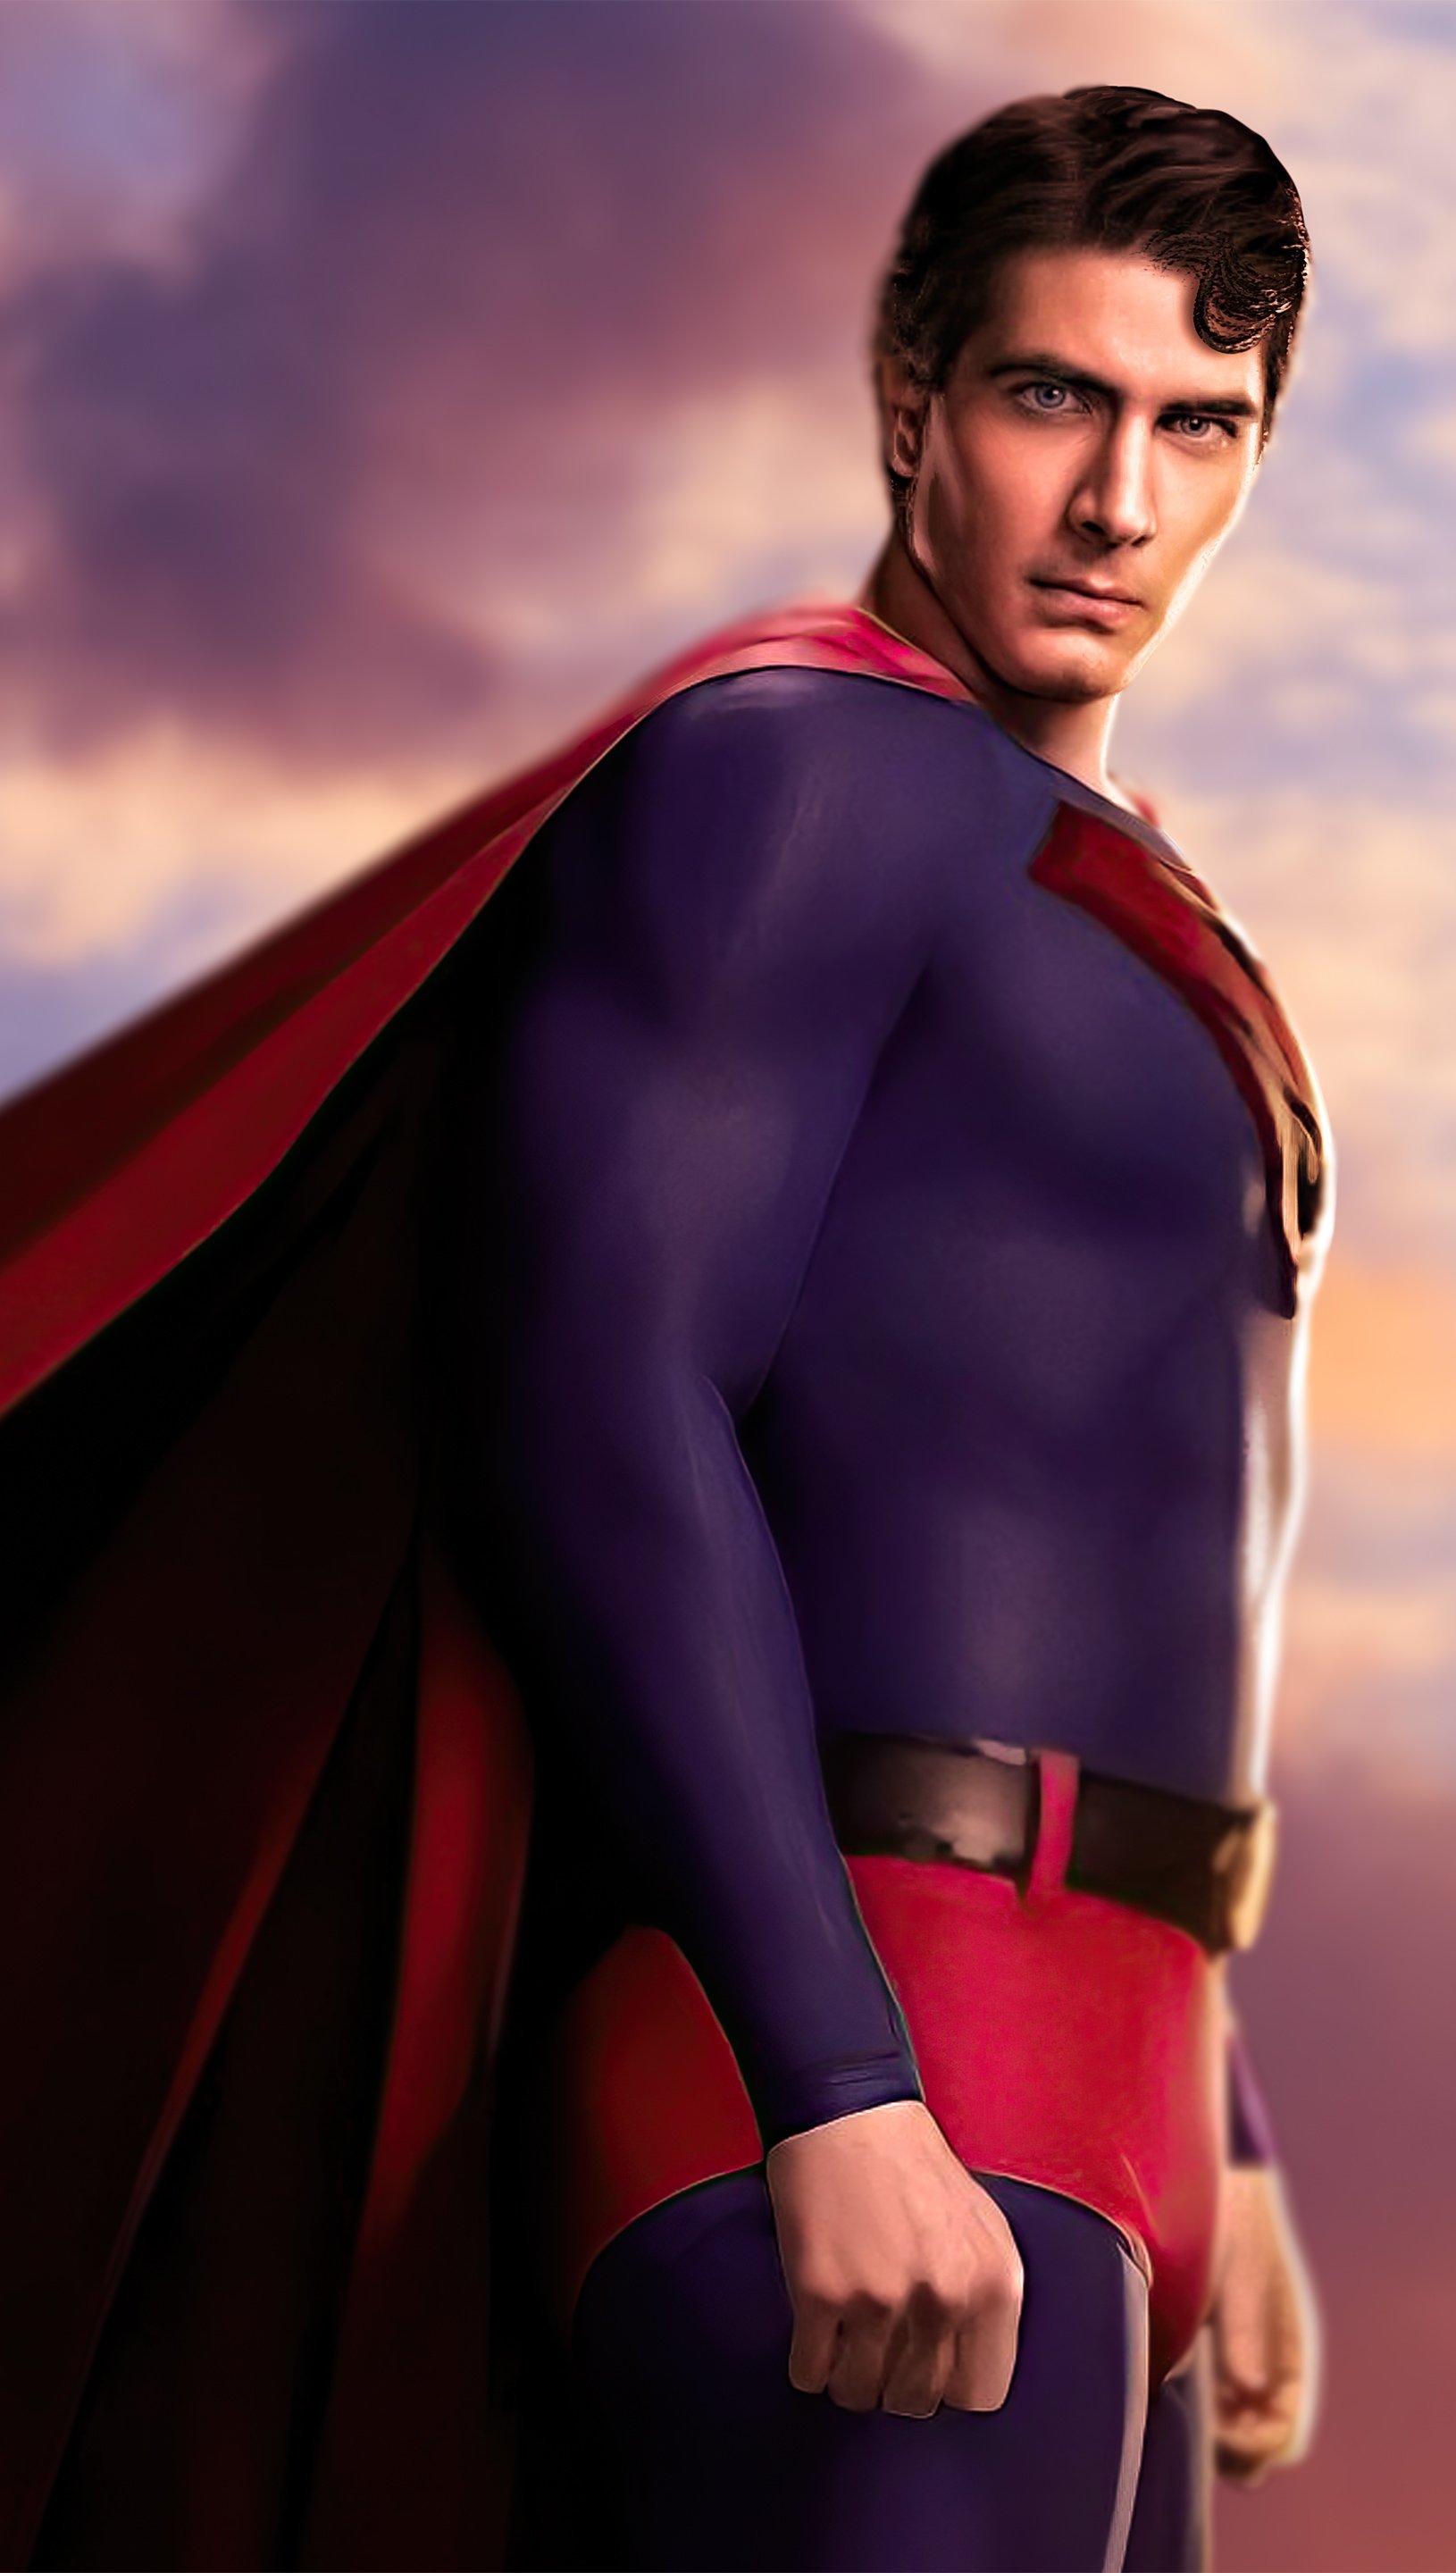 Wallpaper Brandon Routh as Superman Vertical